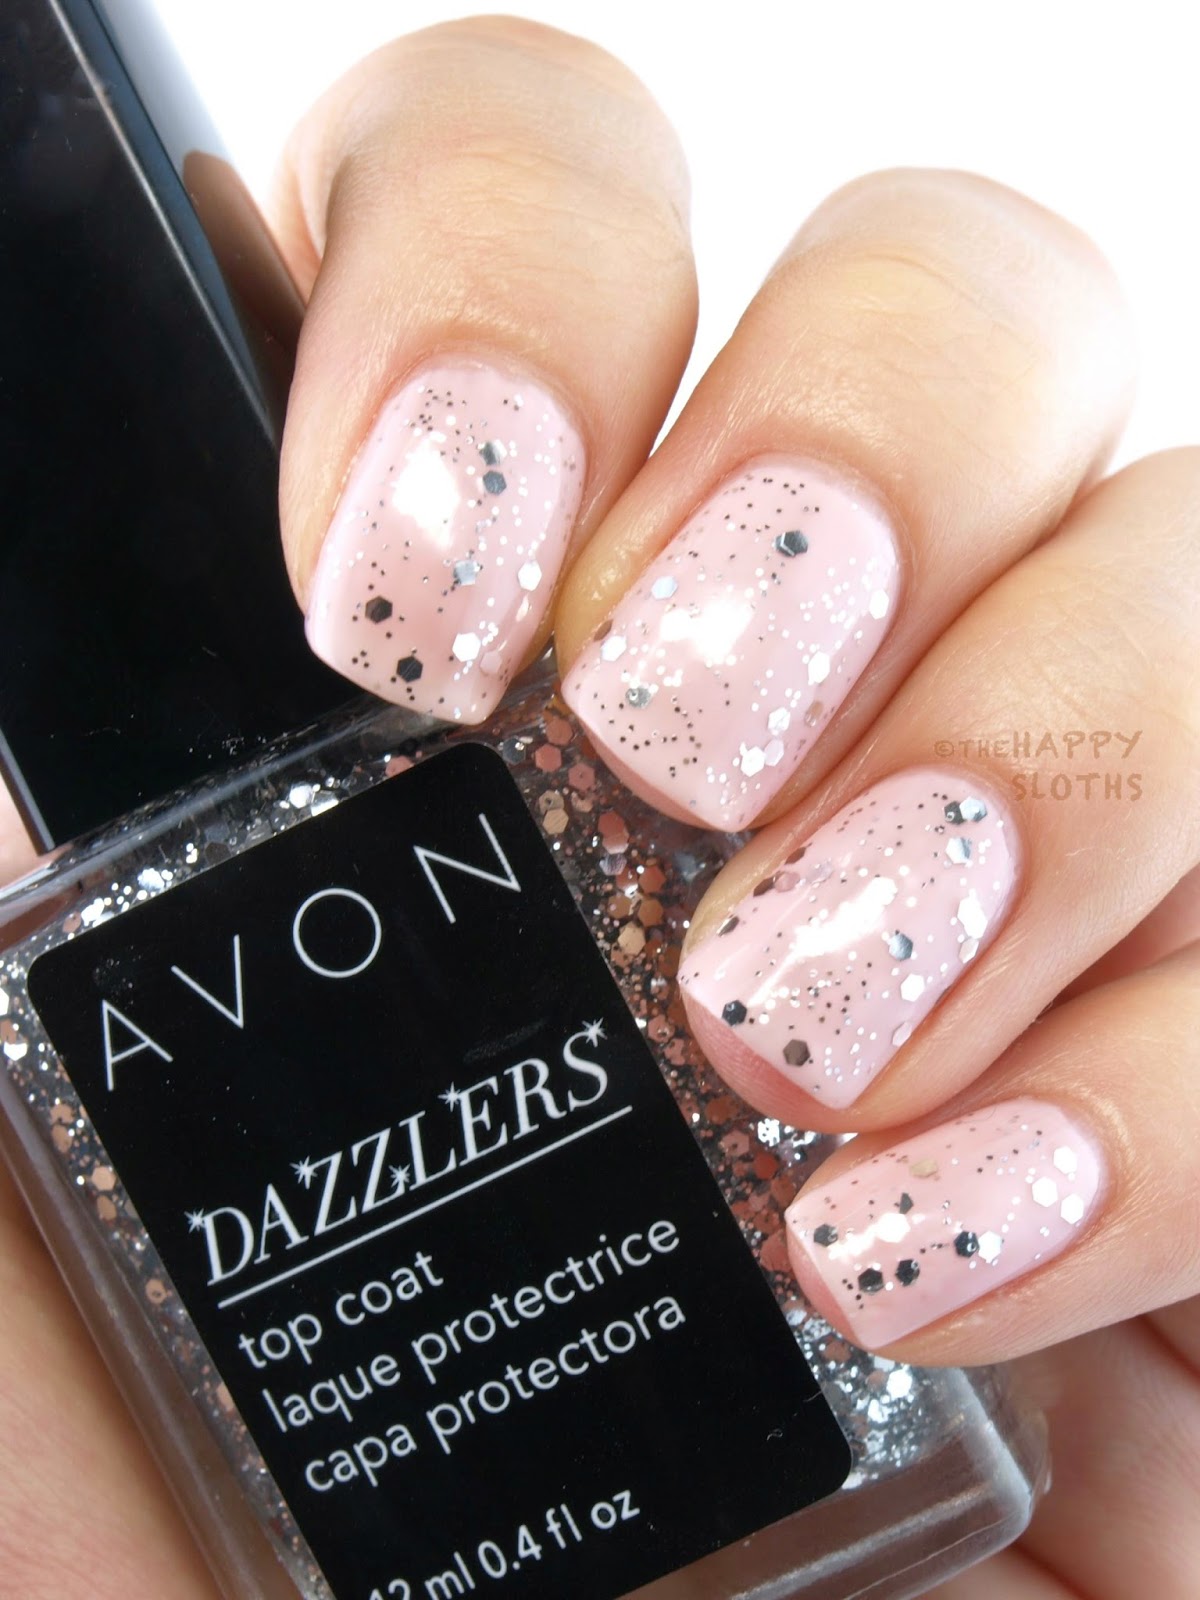 Avon Dazzlers Top Coat: Review and Swatches Va Va Violet